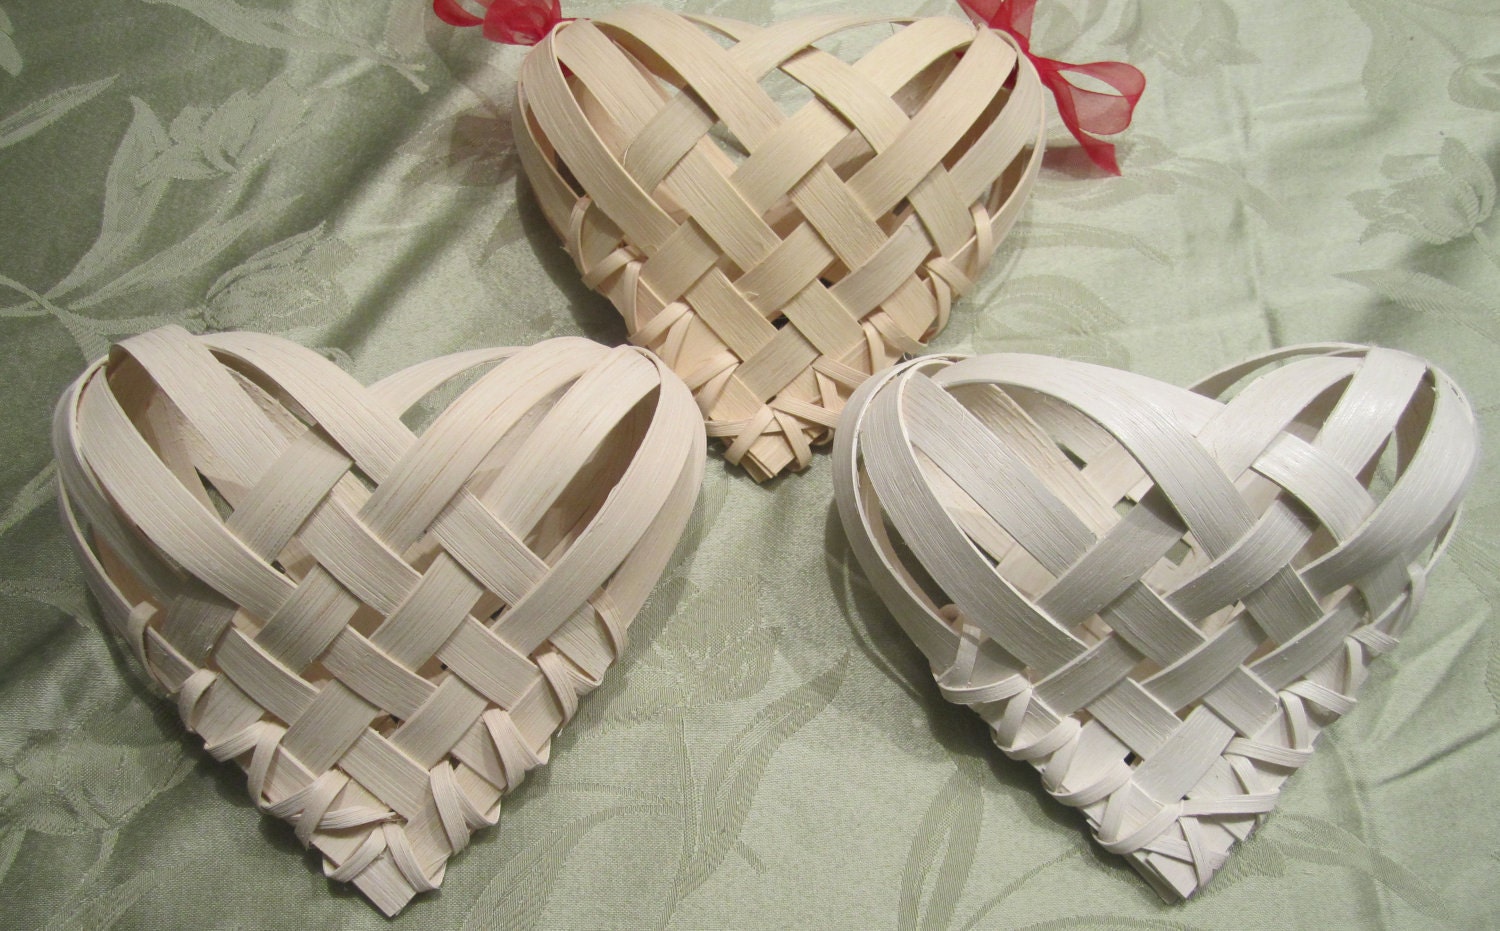 woven heart basket